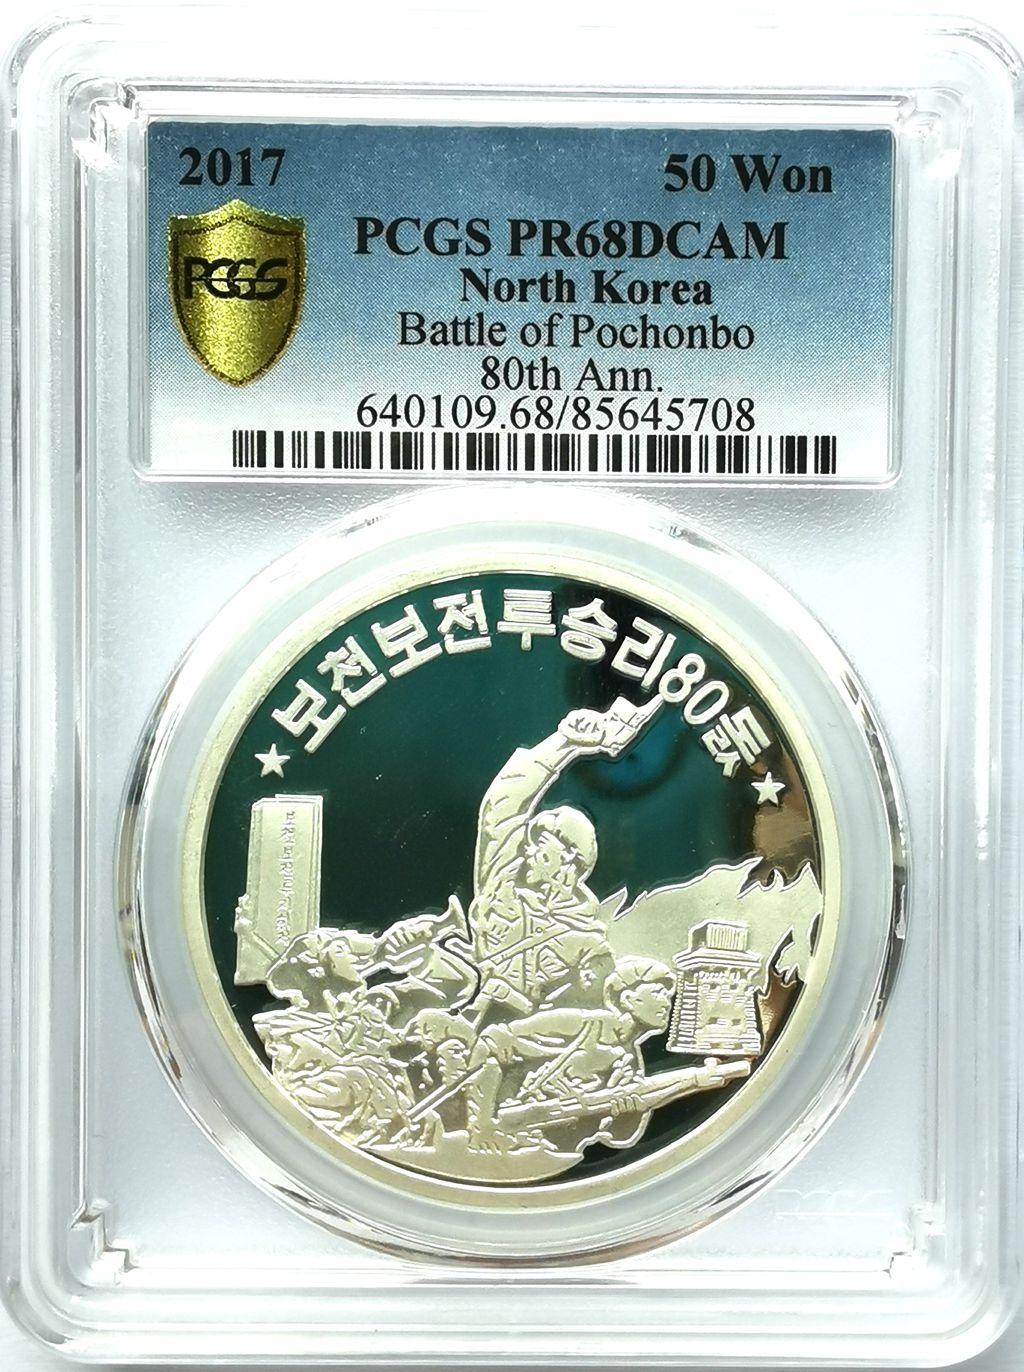 L3560, Korean "Battle of Pochonbo, 80th Anni." Silver Coin 2017, PCGS PR68 DCAM